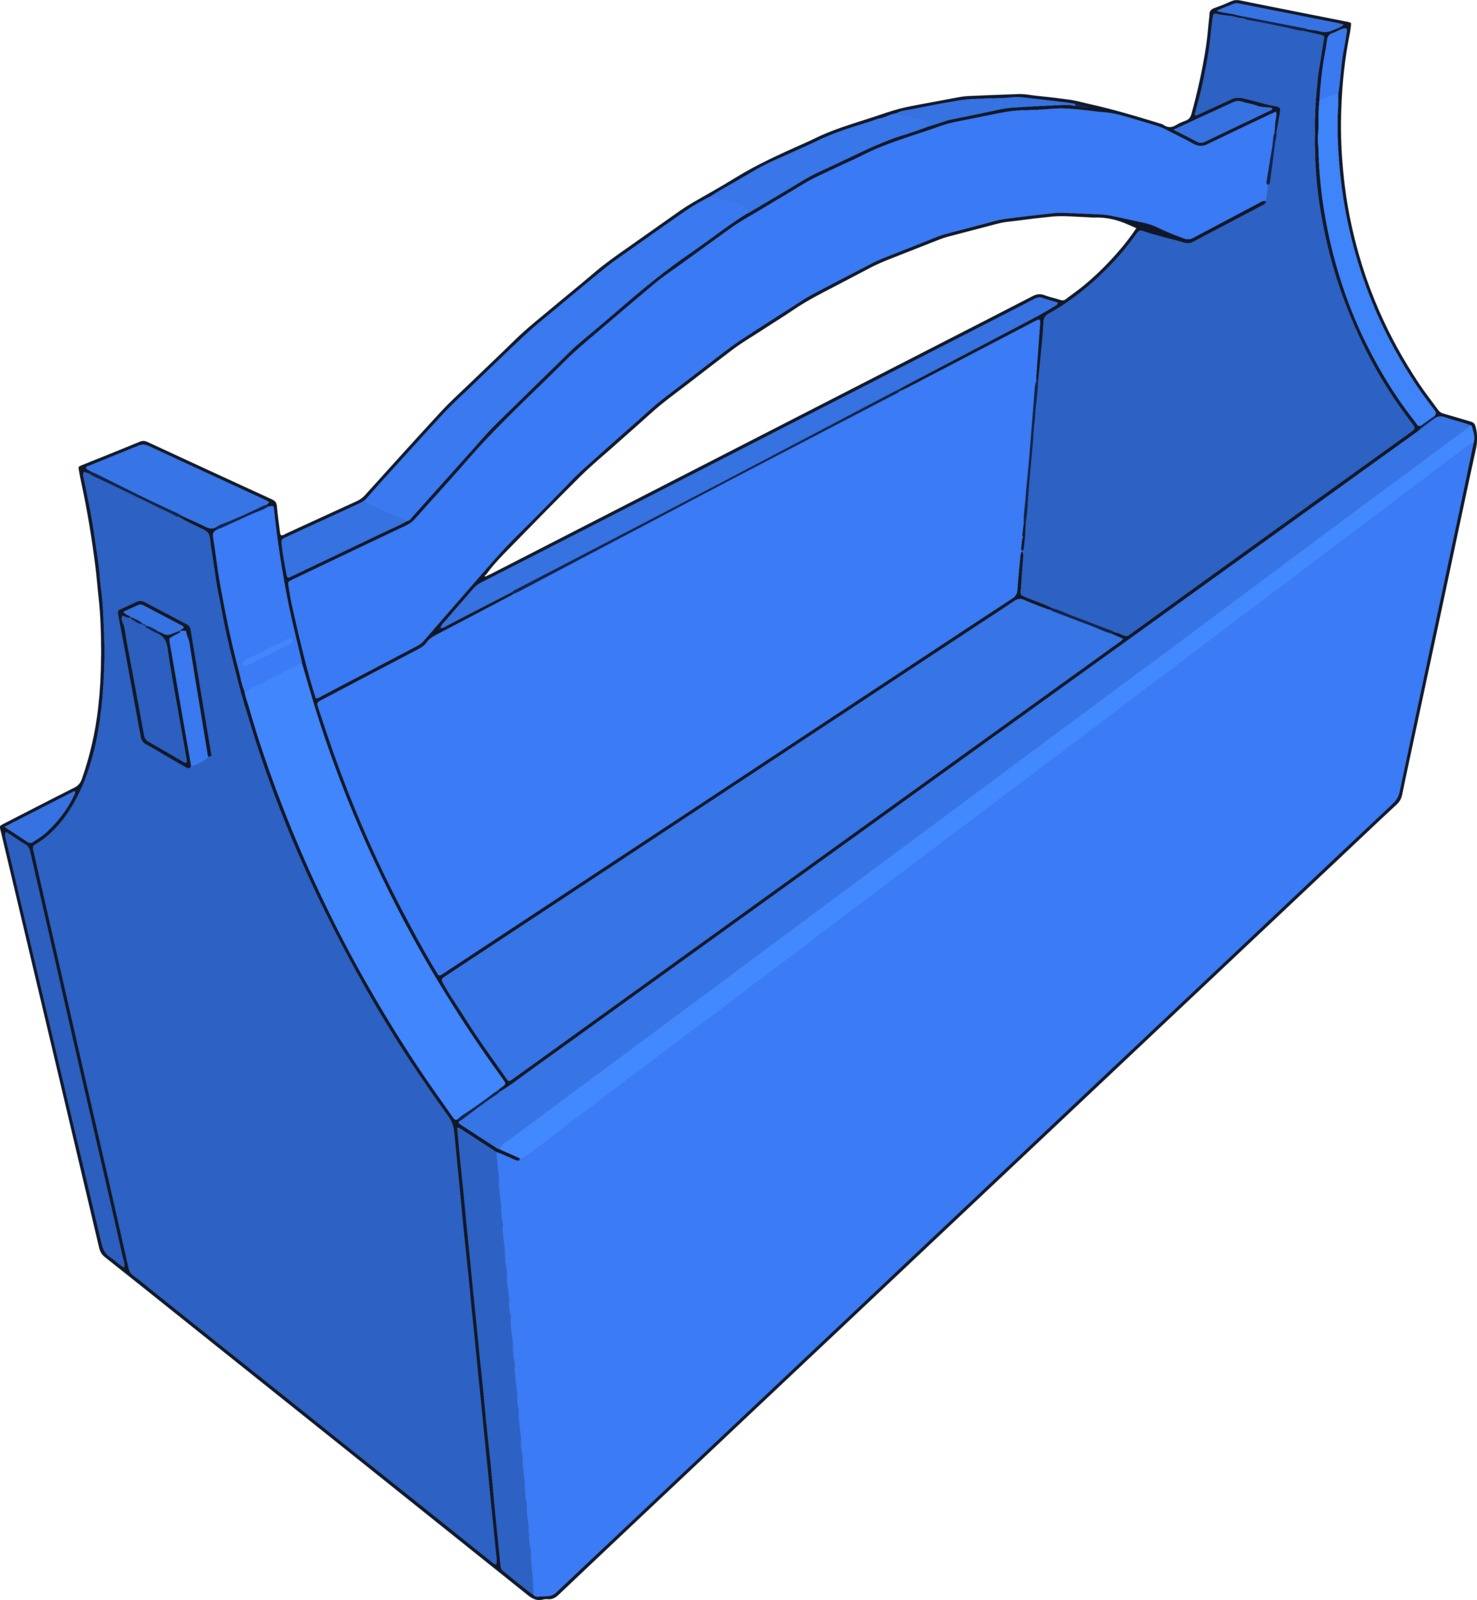 Blue tool box, illustration, vector on white background.